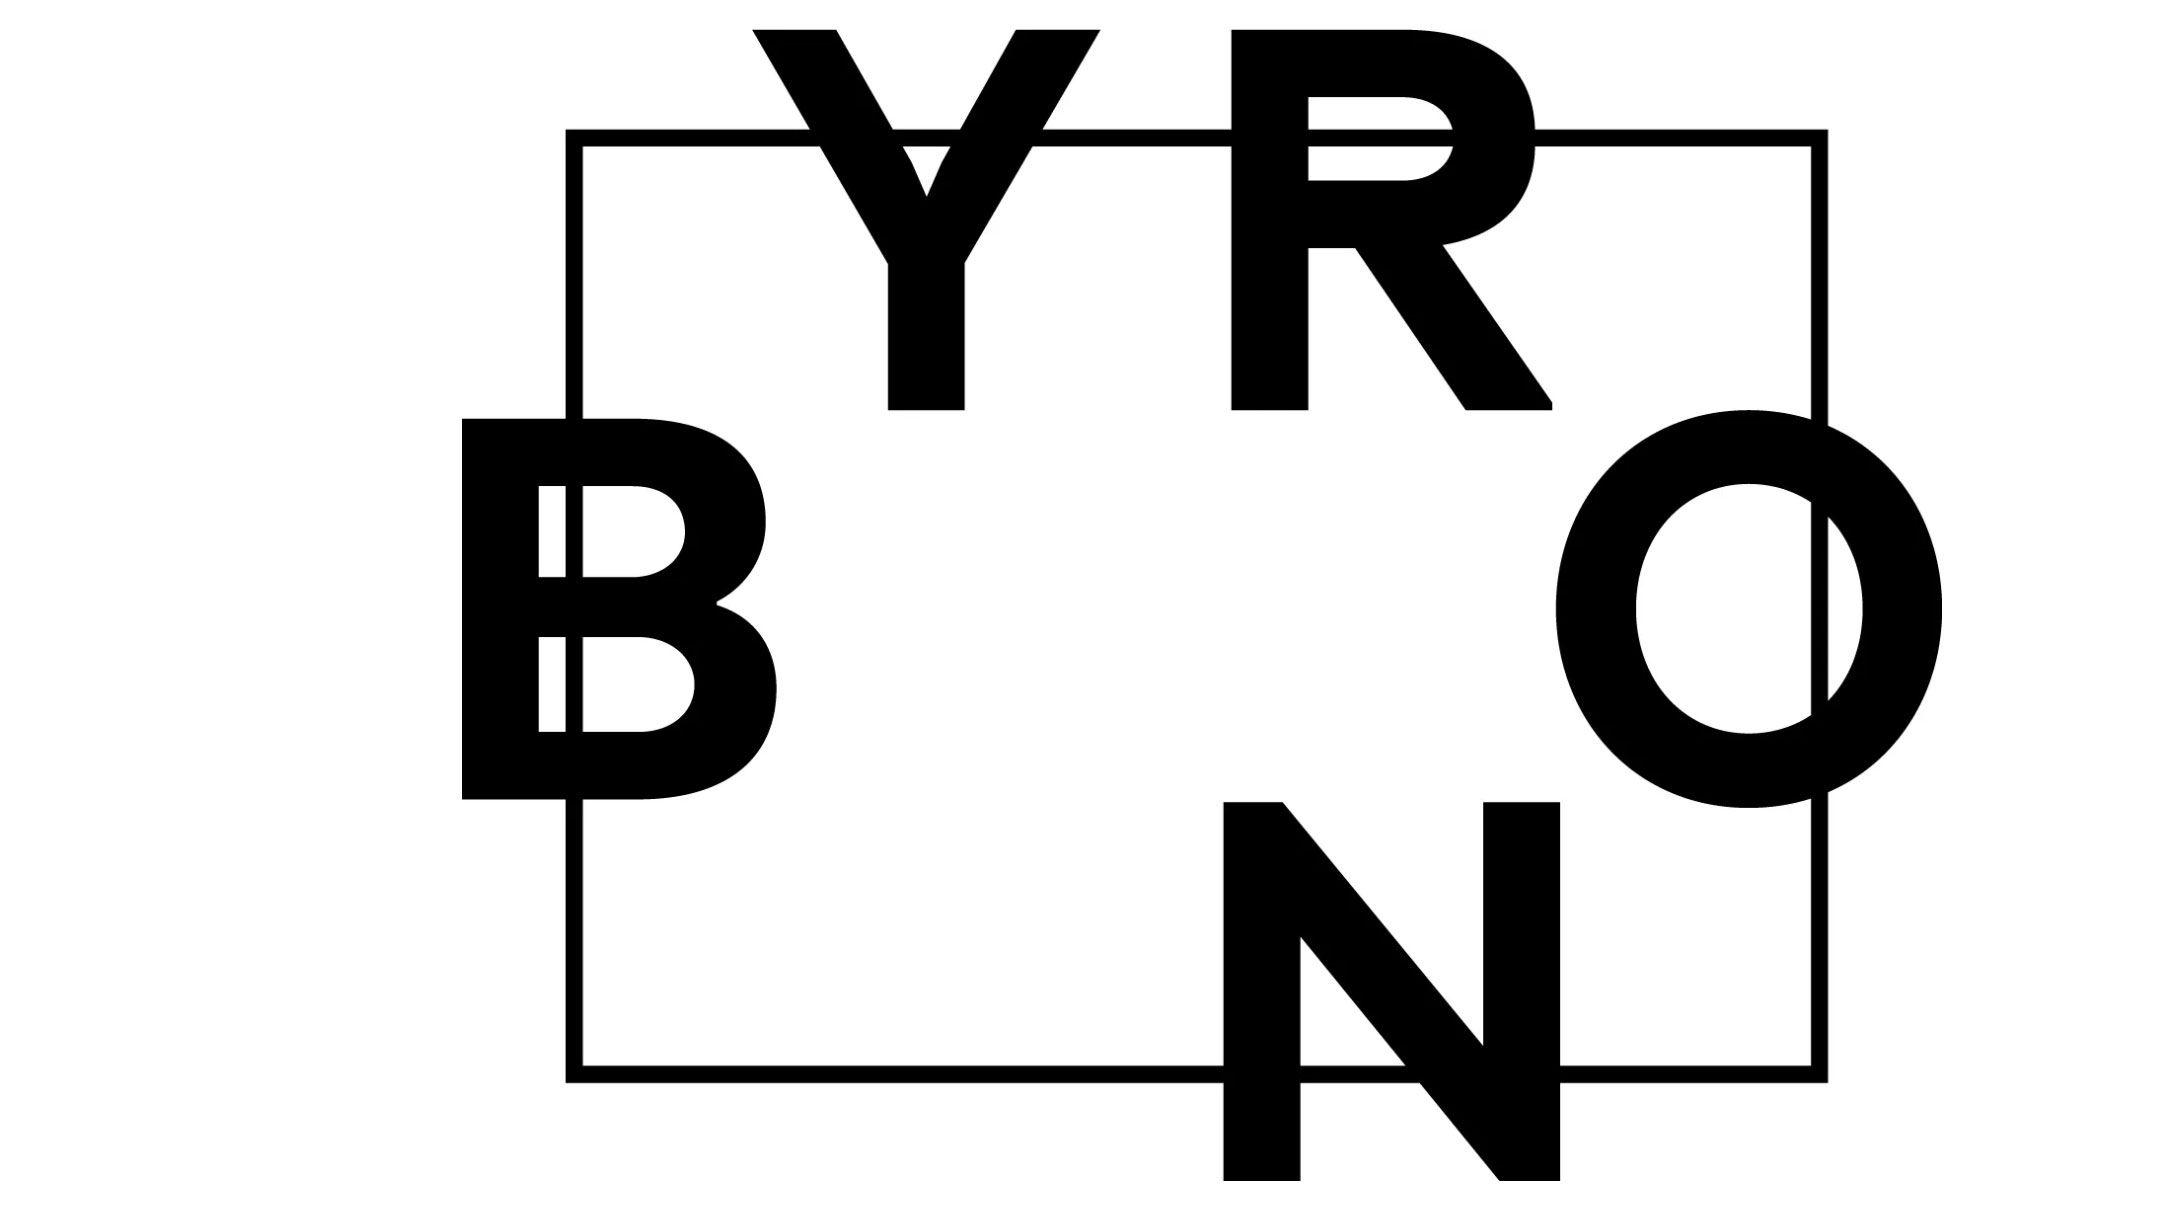 Save Logo - Can a new Byron logo save the struggling burger chain? | Creative Bloq